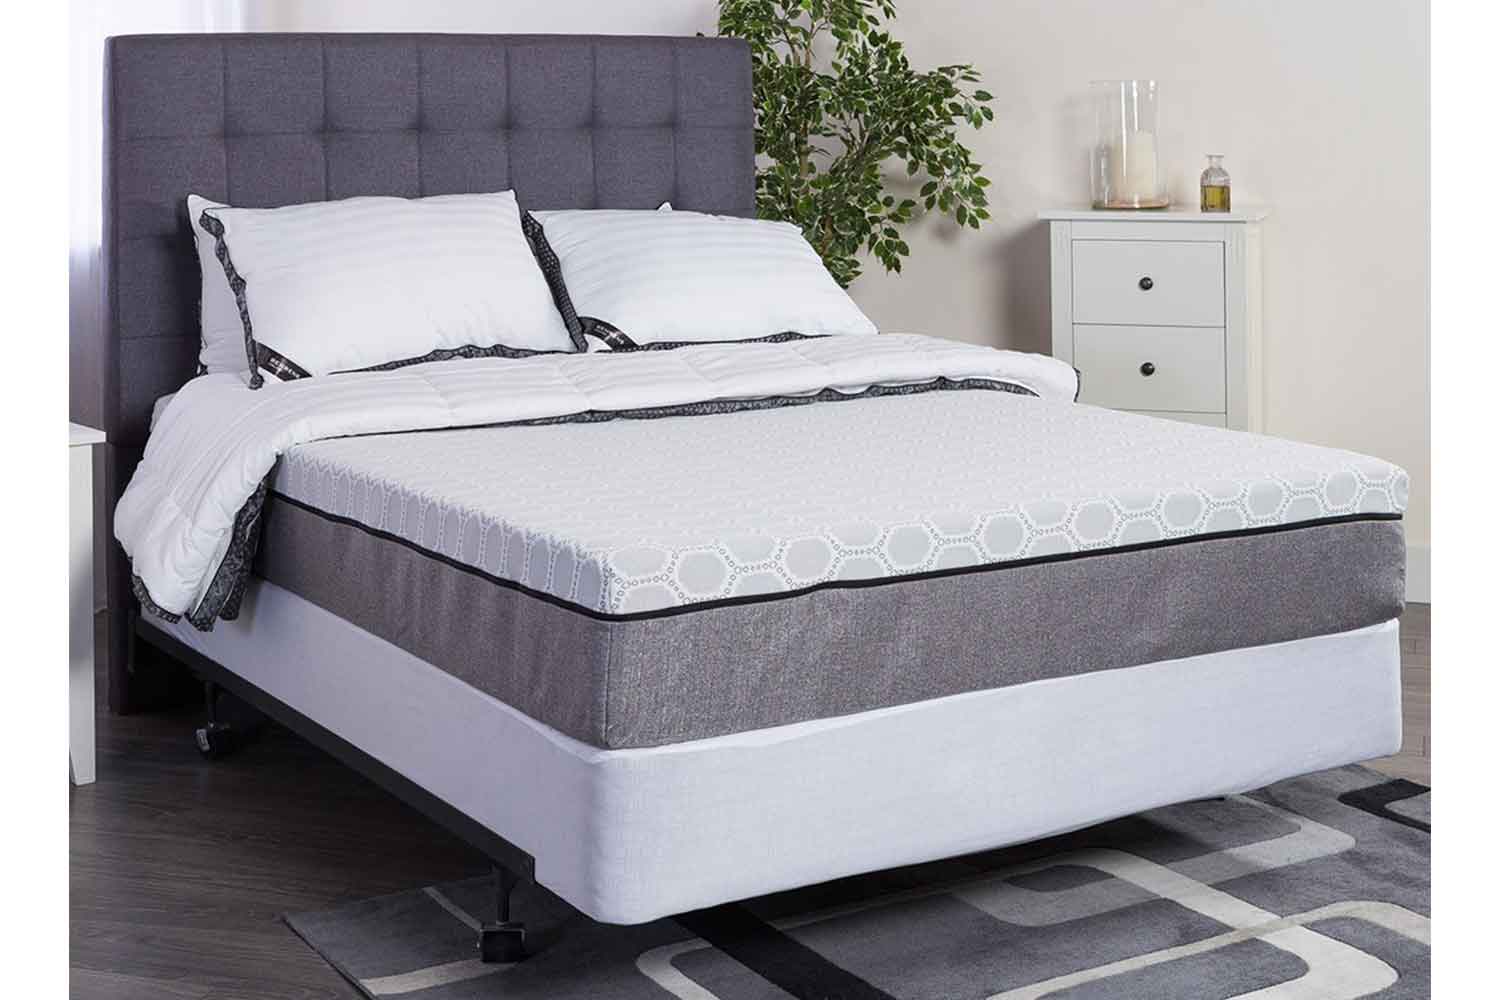 mattress for sale louisville ky